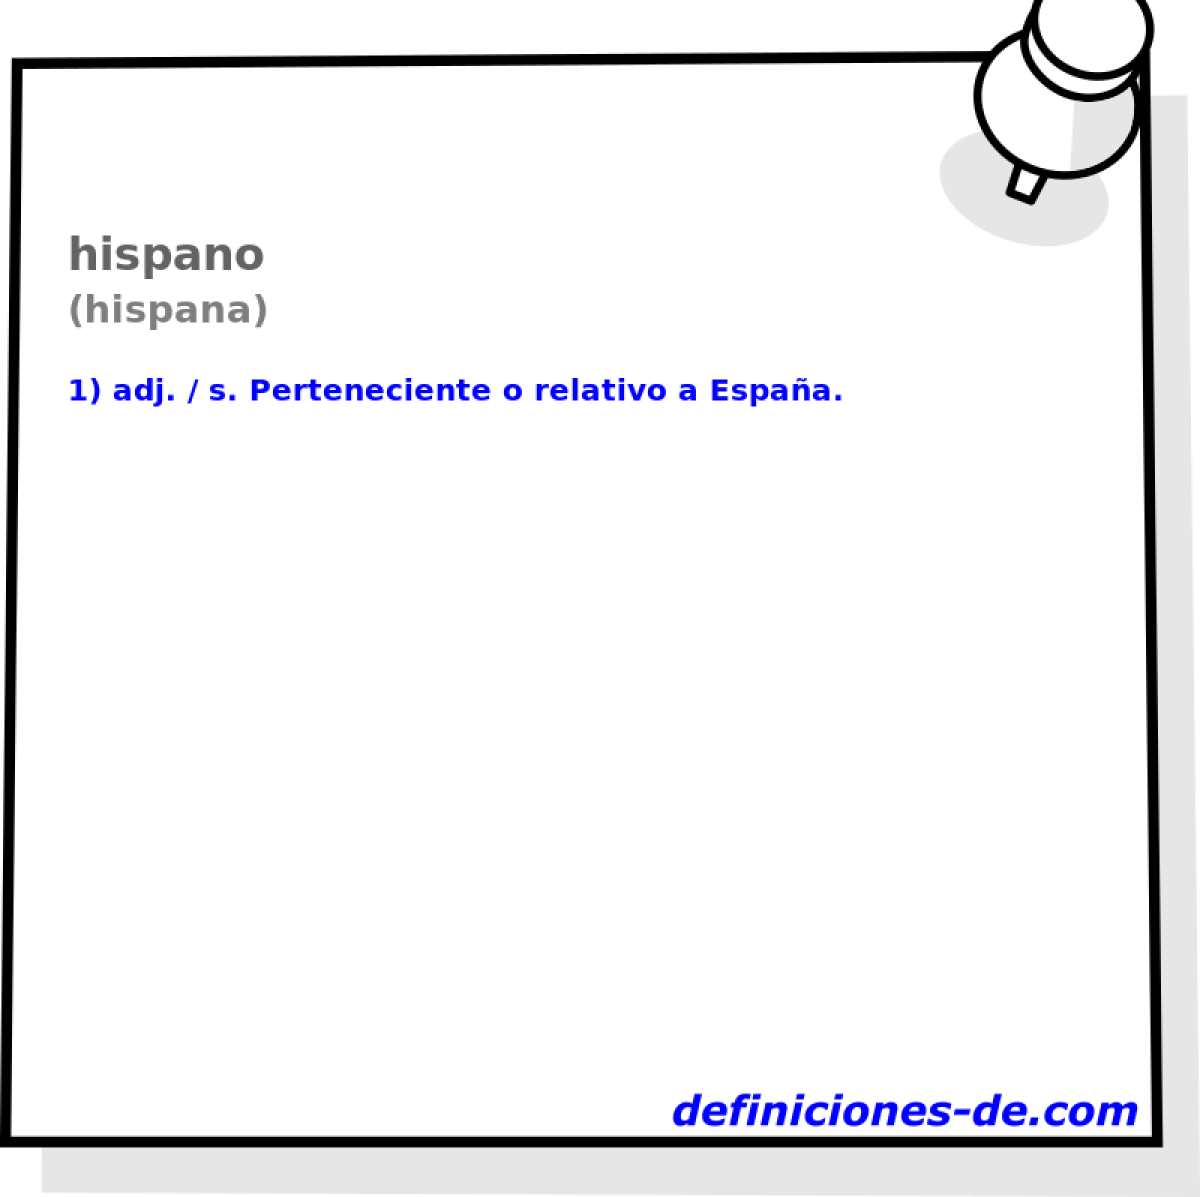 hispano (hispana)